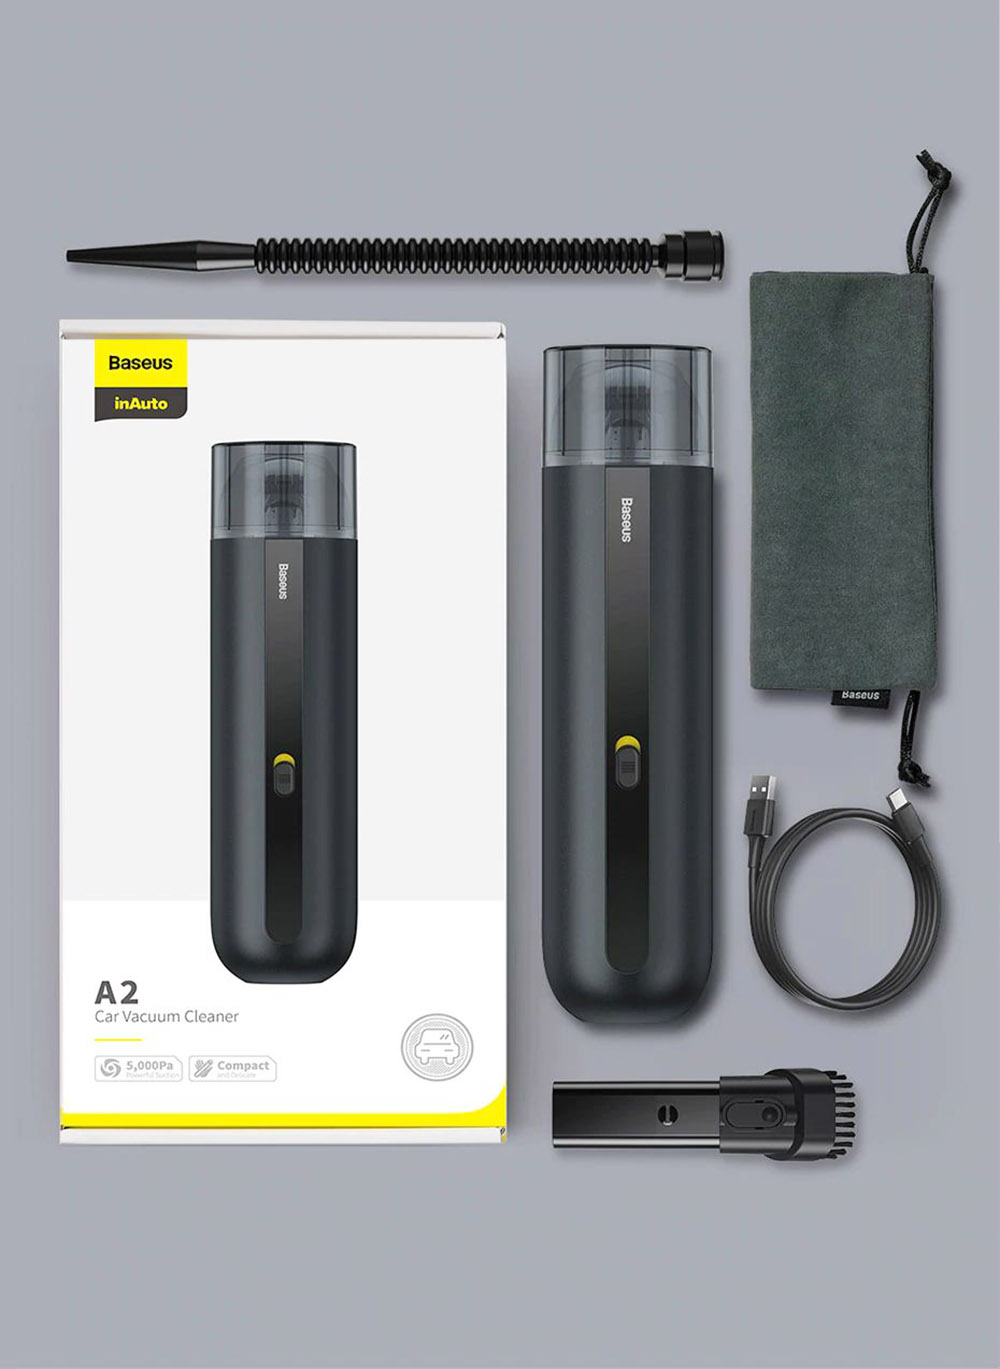 Baseus Car Vacuum Cleaner Wireless 5000Pa Handheld Mini Vaccum Cleaner For Car Home Desktop Cleaning Portable Vacuum - Black